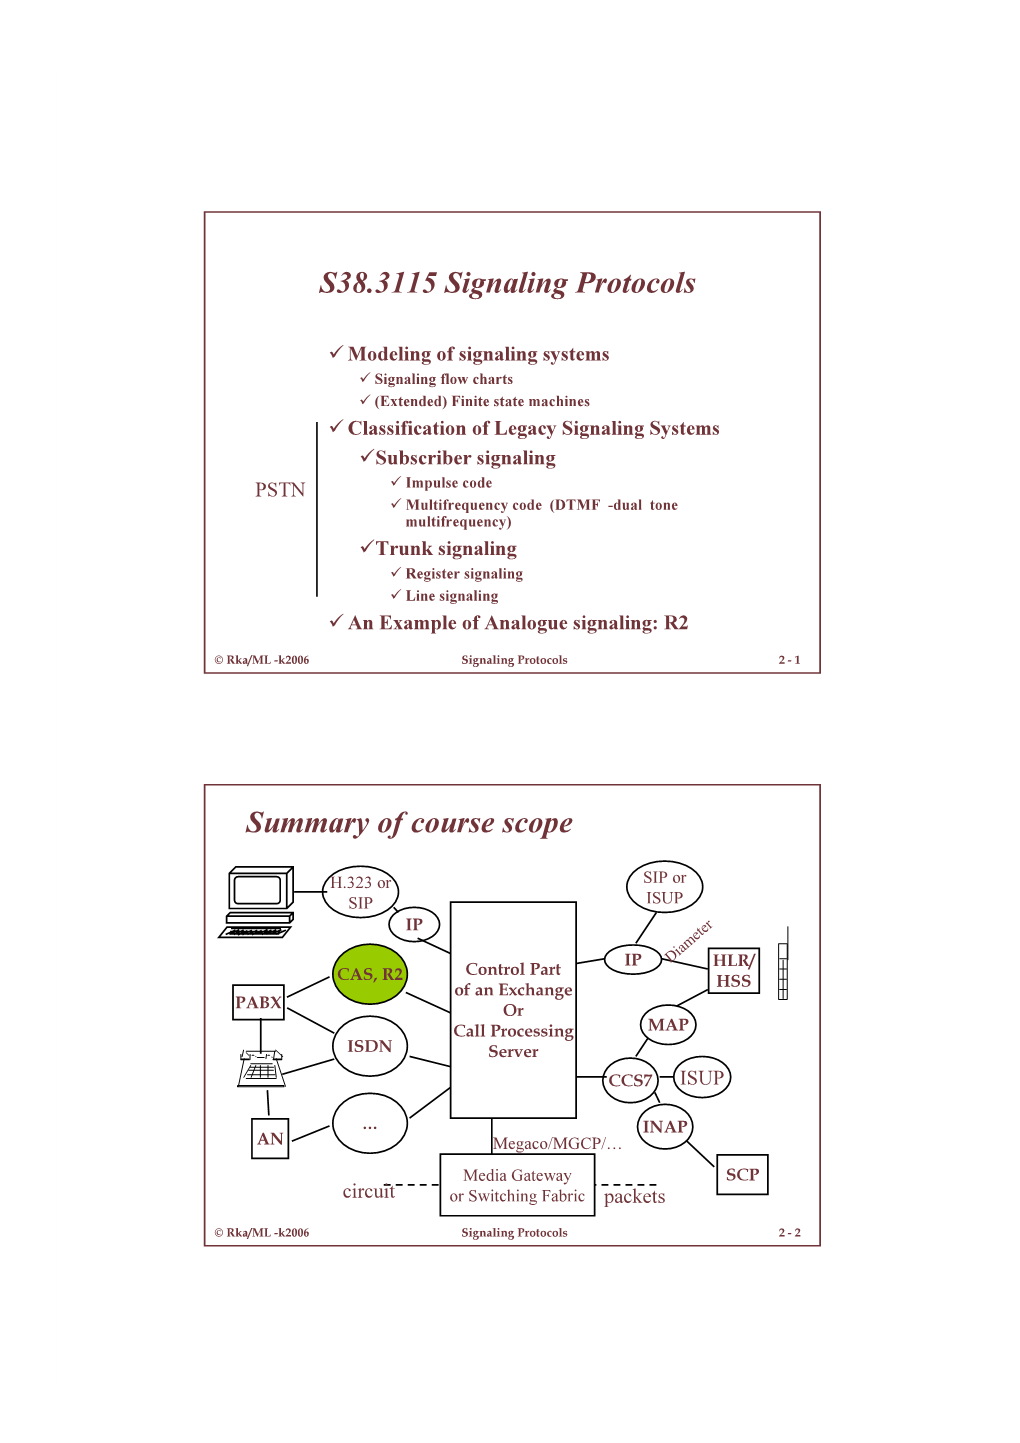 S38.3115 Signaling Protocols Summary of Course Scope